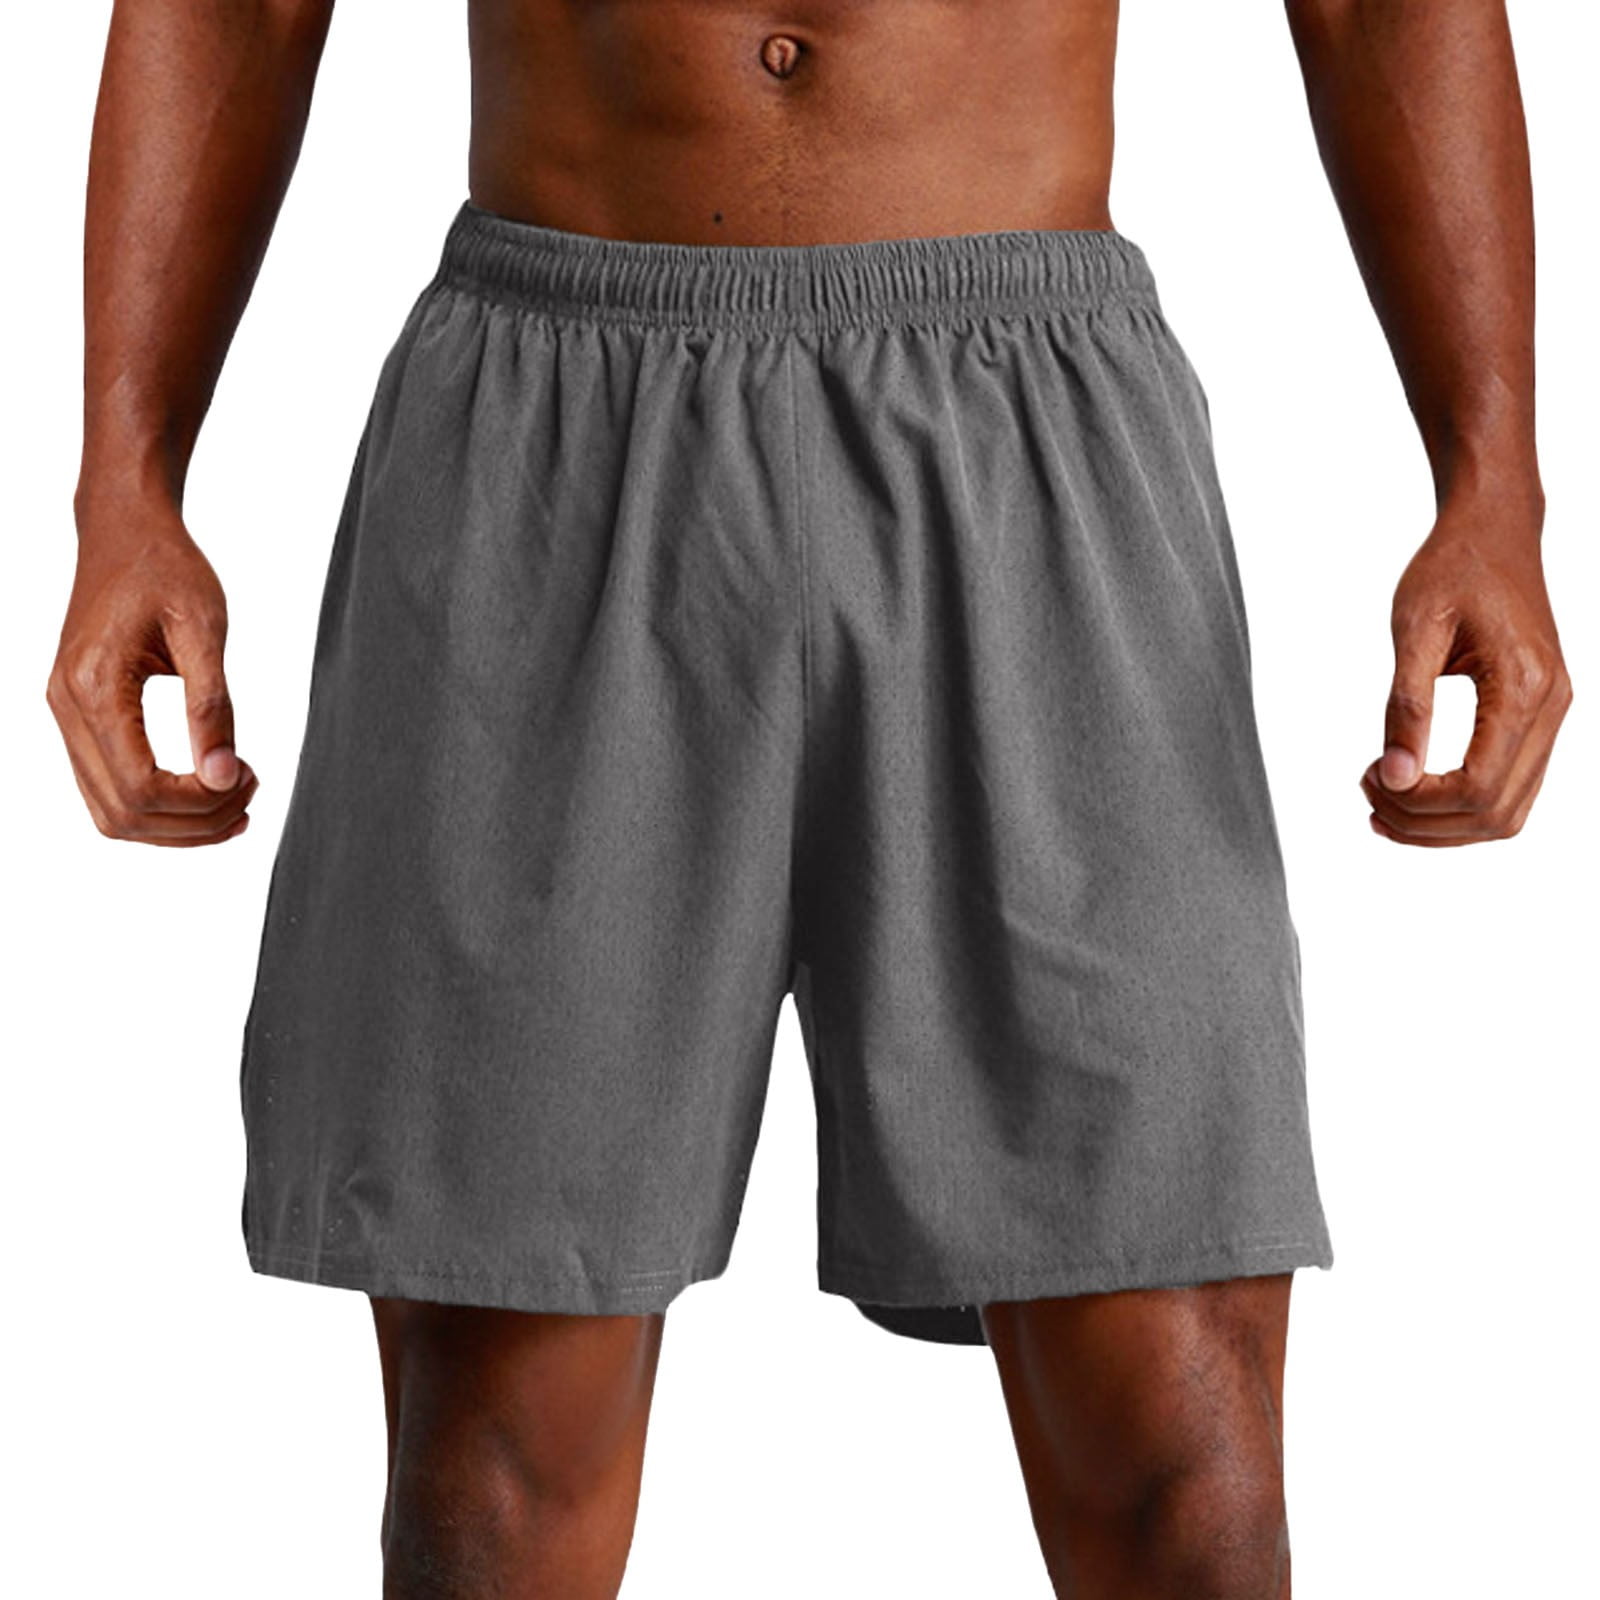 Rrunsv Mens Shorts Mens Running Shorts Gym Workout Shorts for Men Grey ...